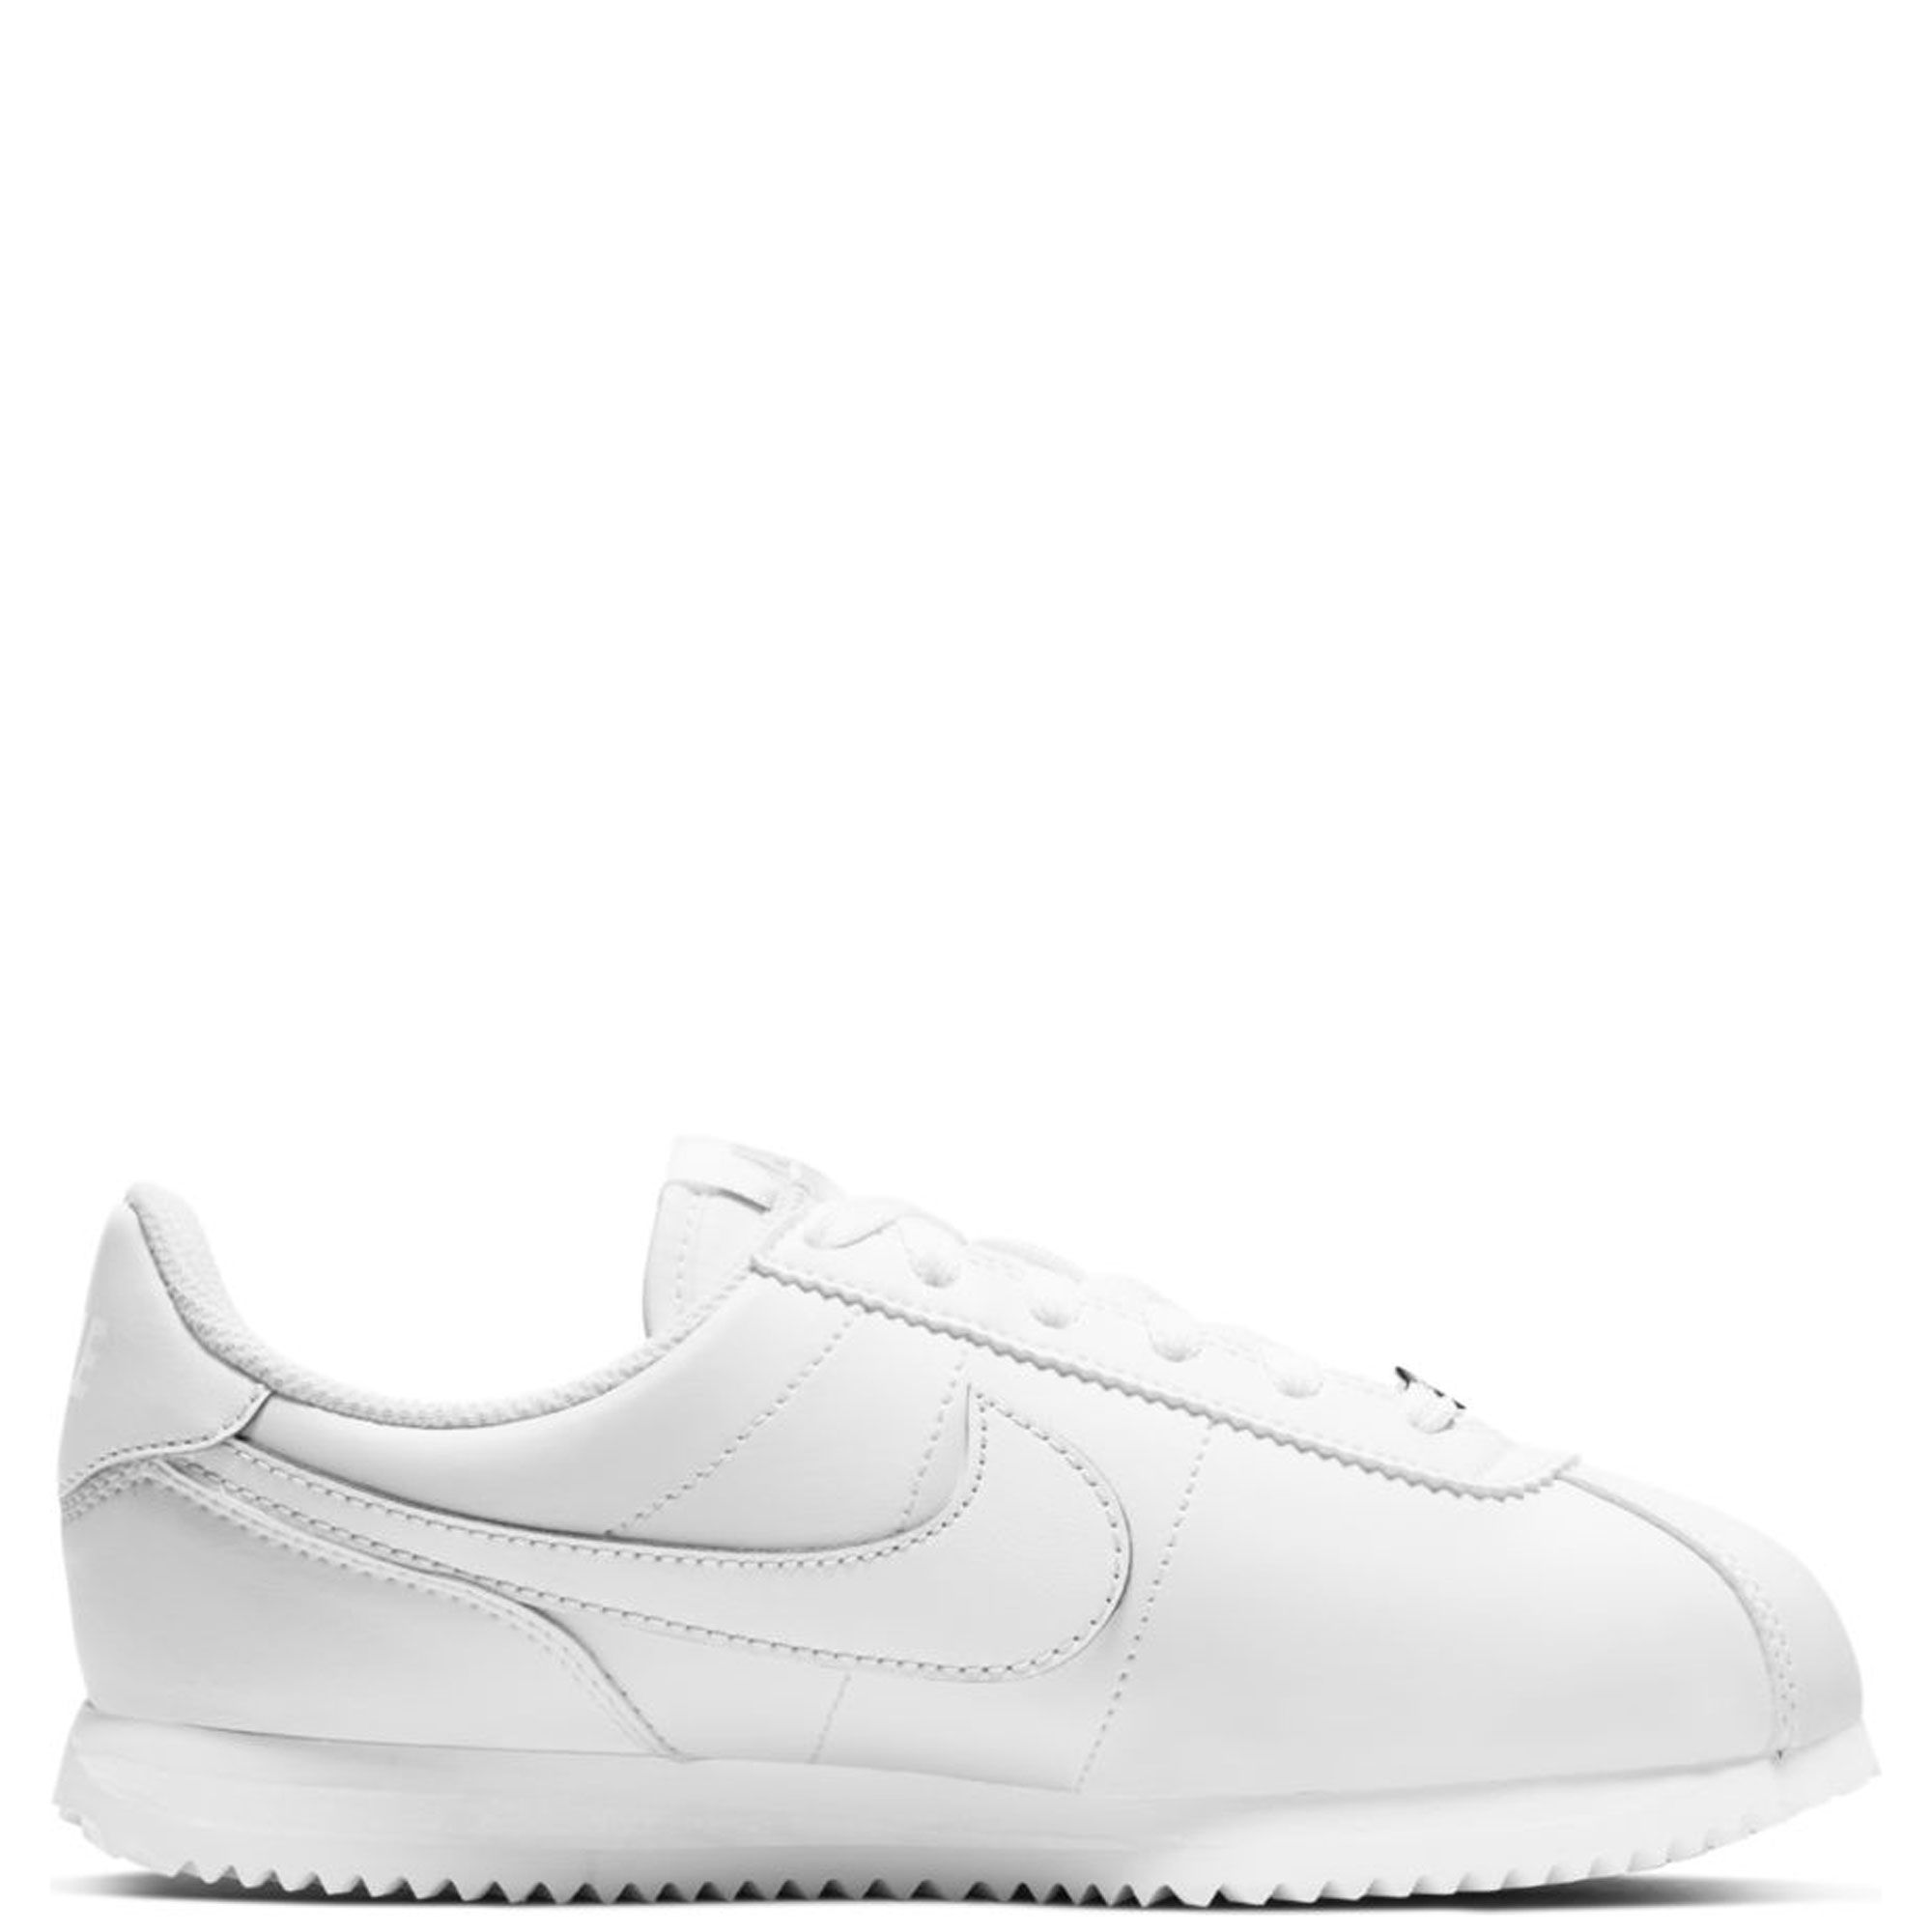 Nike Cortez Nylon (PS) Black/White Running Shoes Size 1Y 